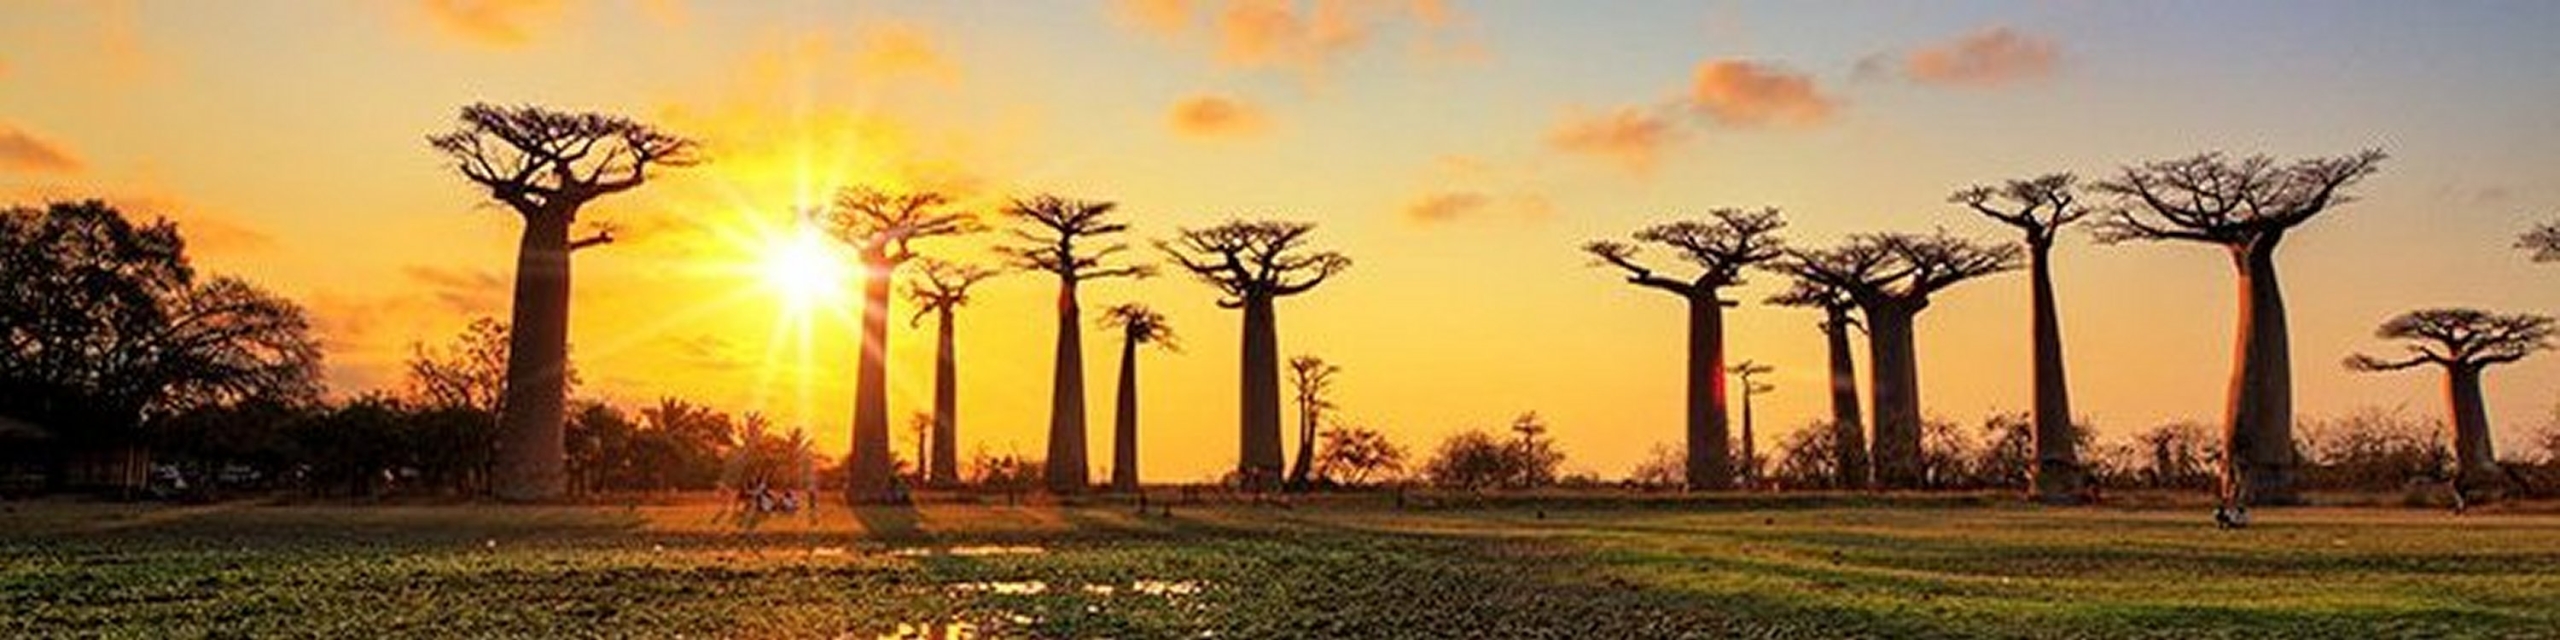 L'allée des Baobabs à Madagascar